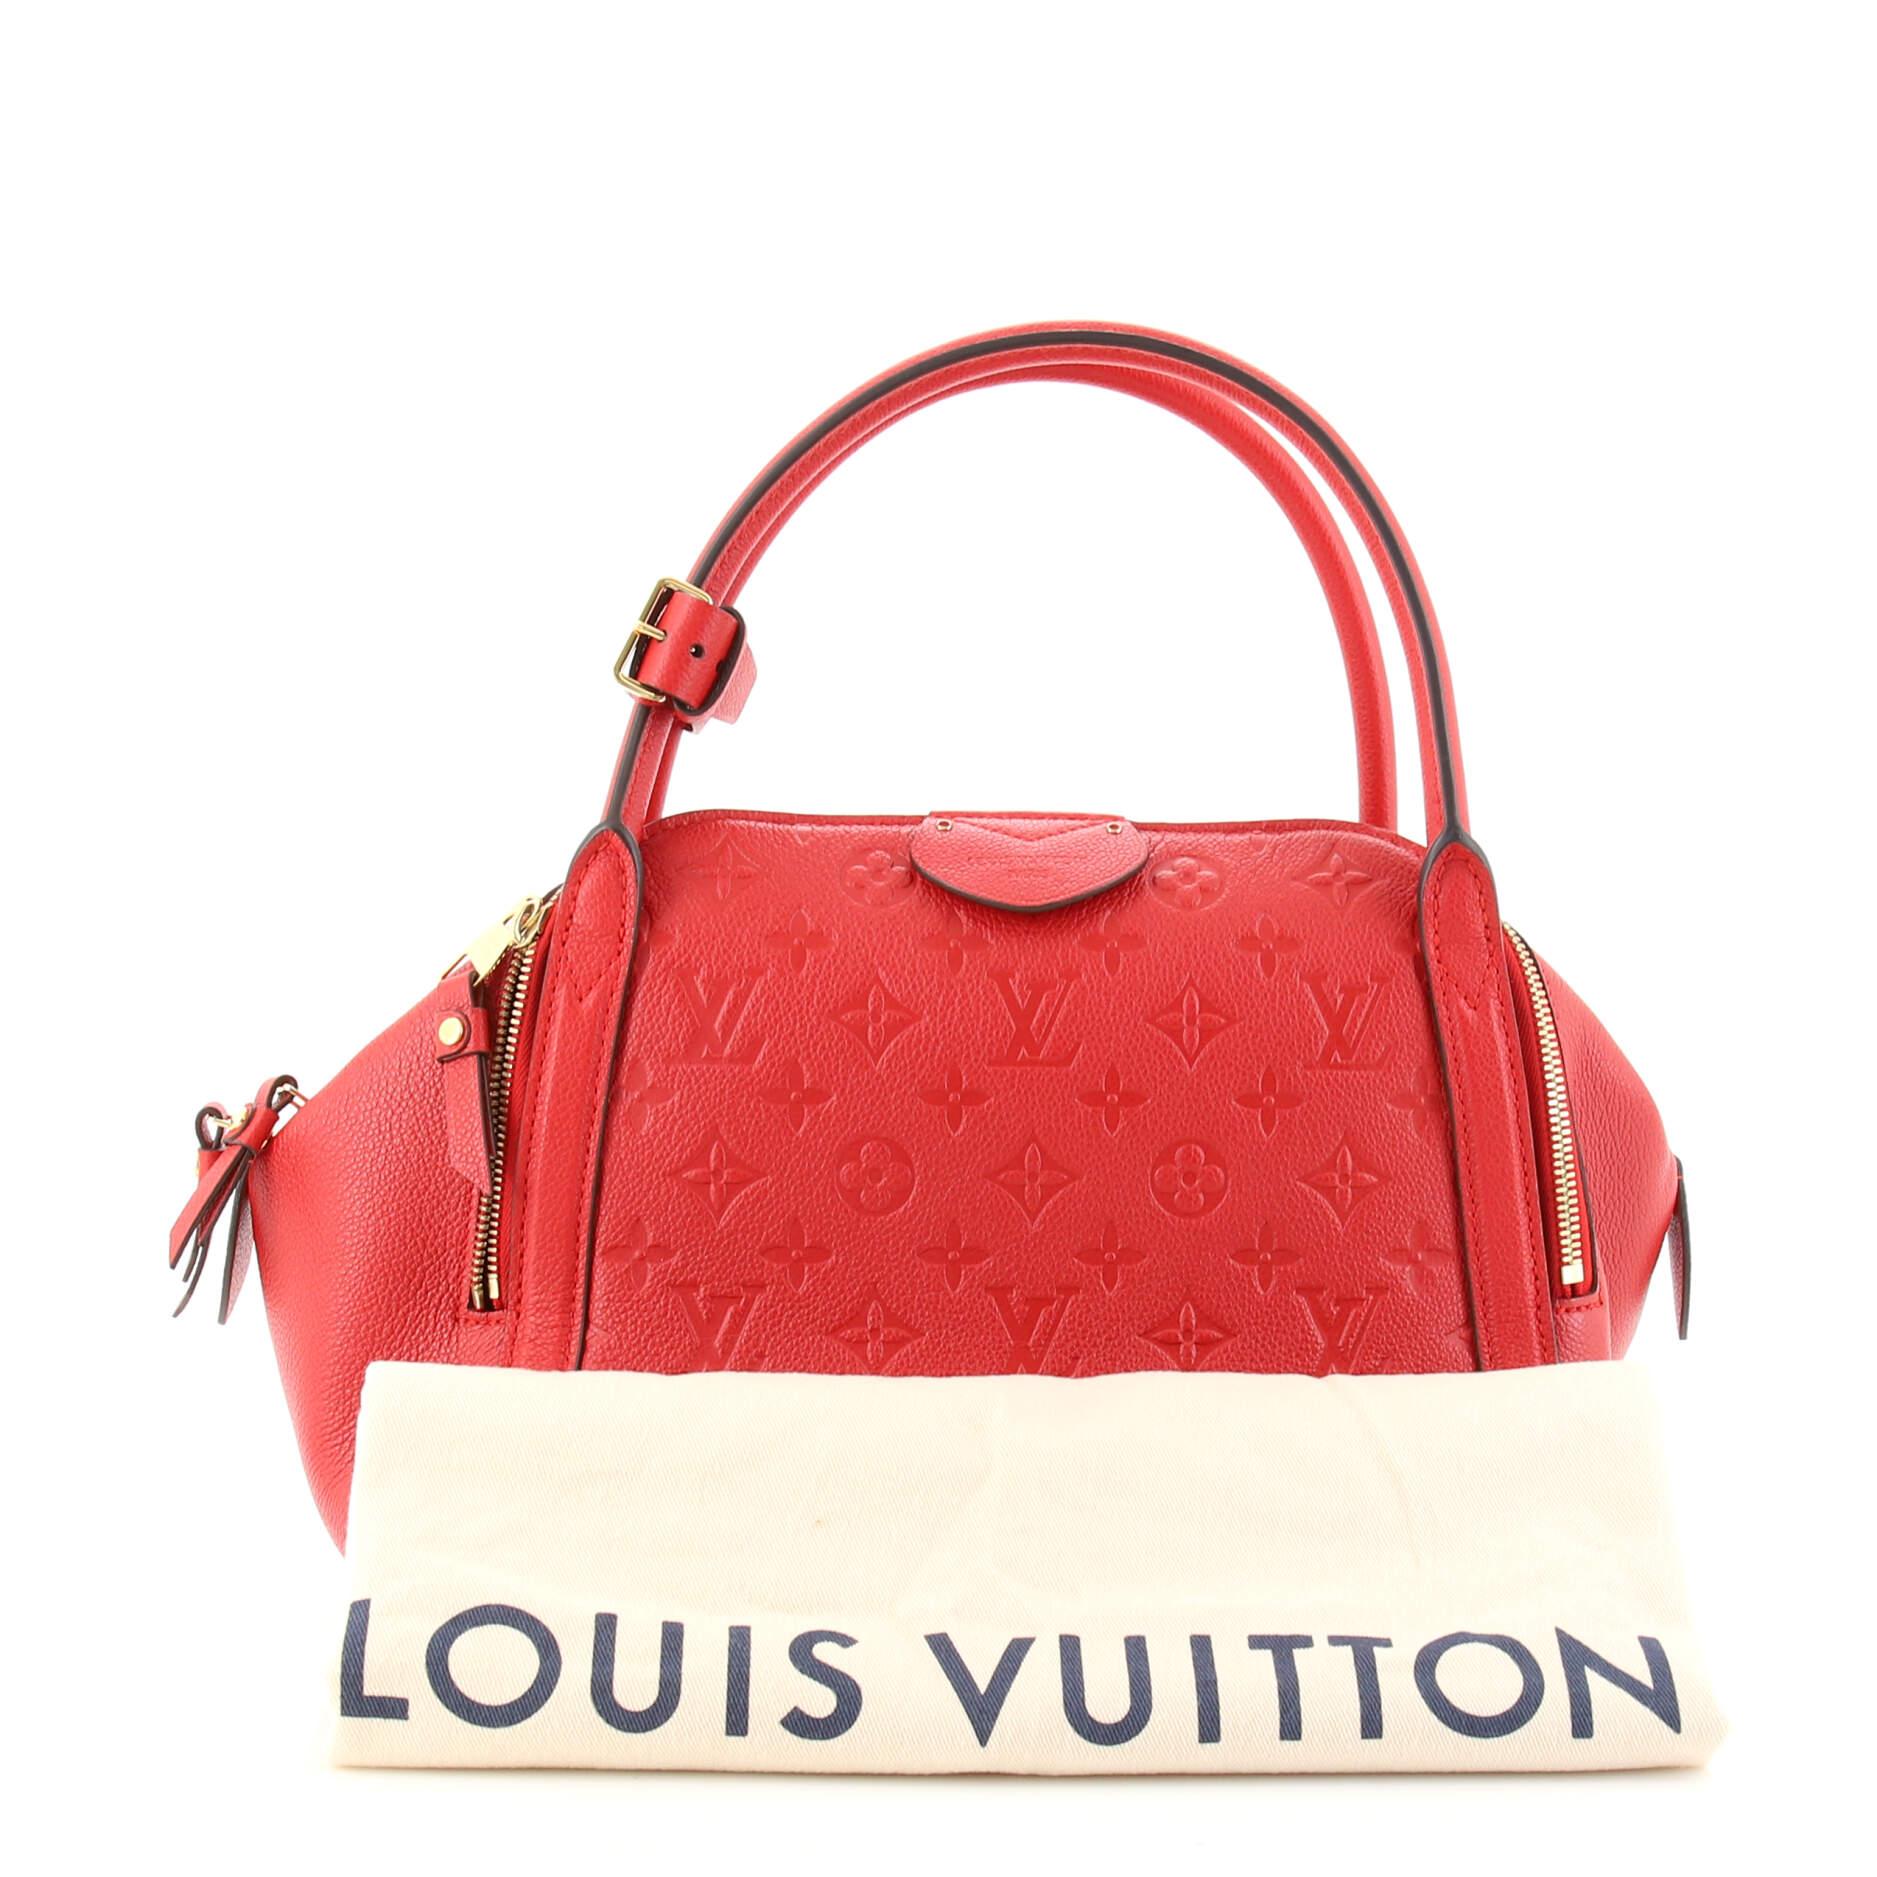 Louis Vuitton Empreinte Marais - For Sale on 1stDibs